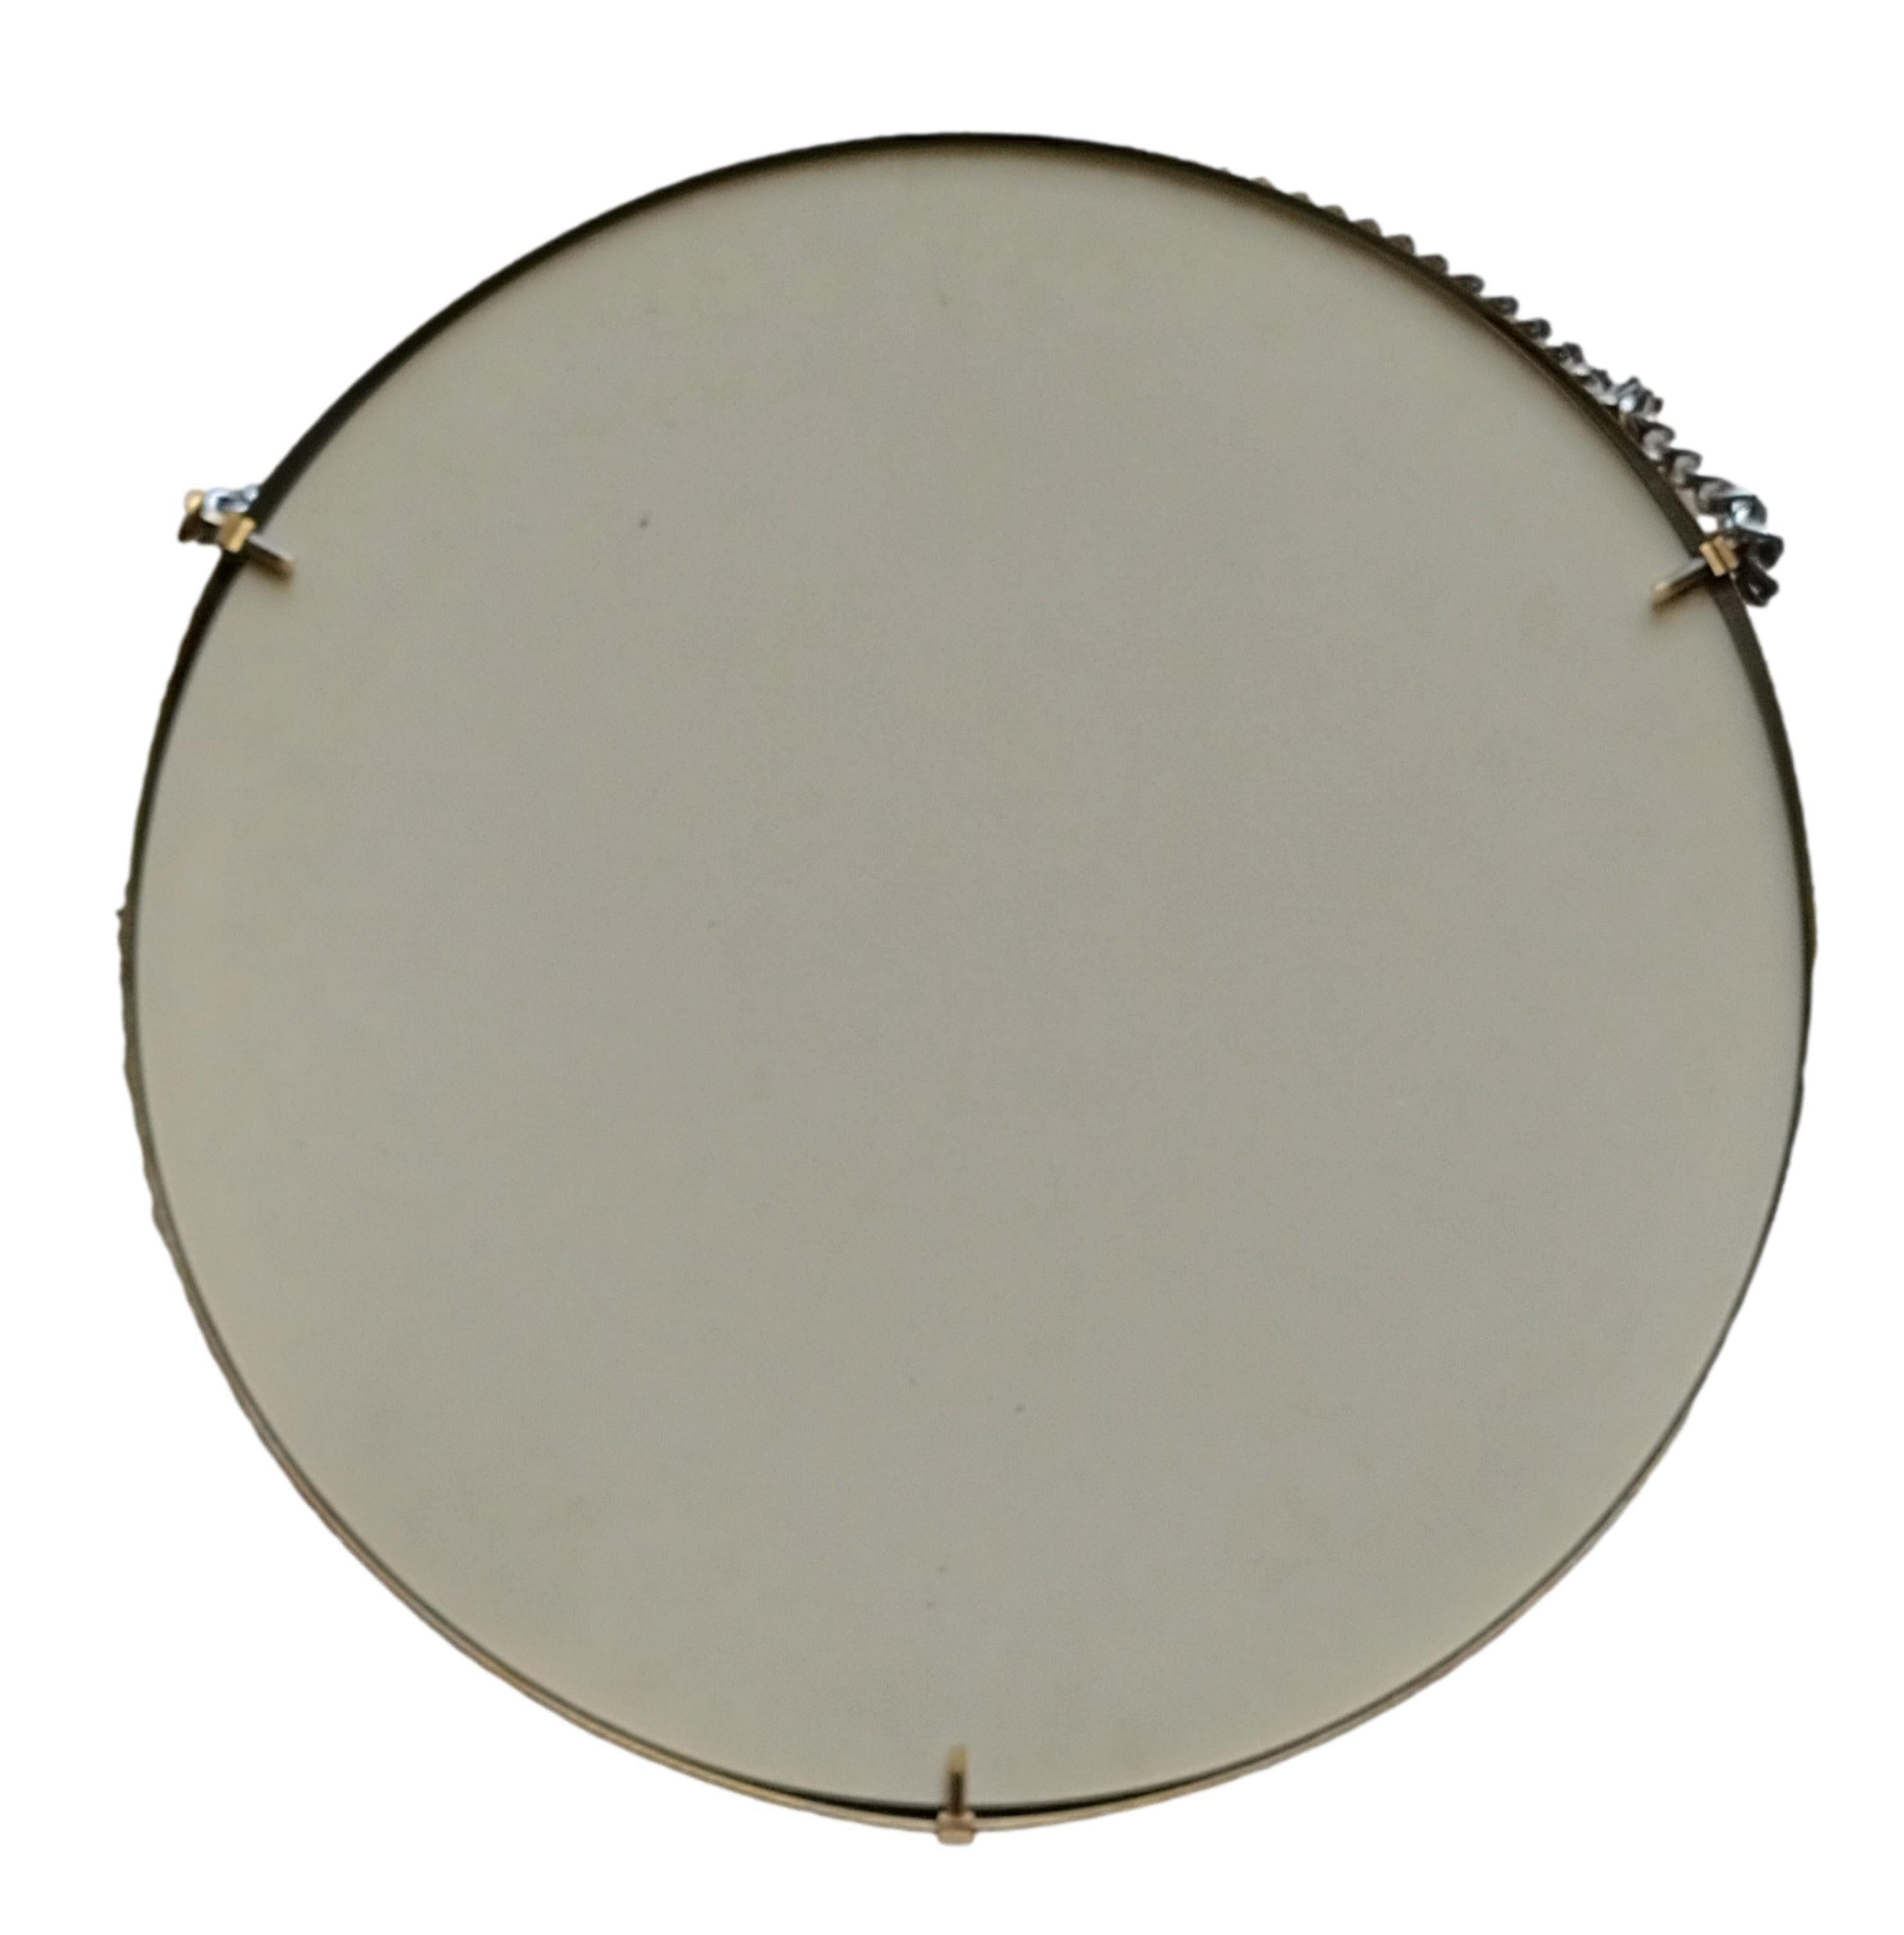 Santambrogio & De Berti Brass Circular Wall Mirror Italy 1960s For Sale 1